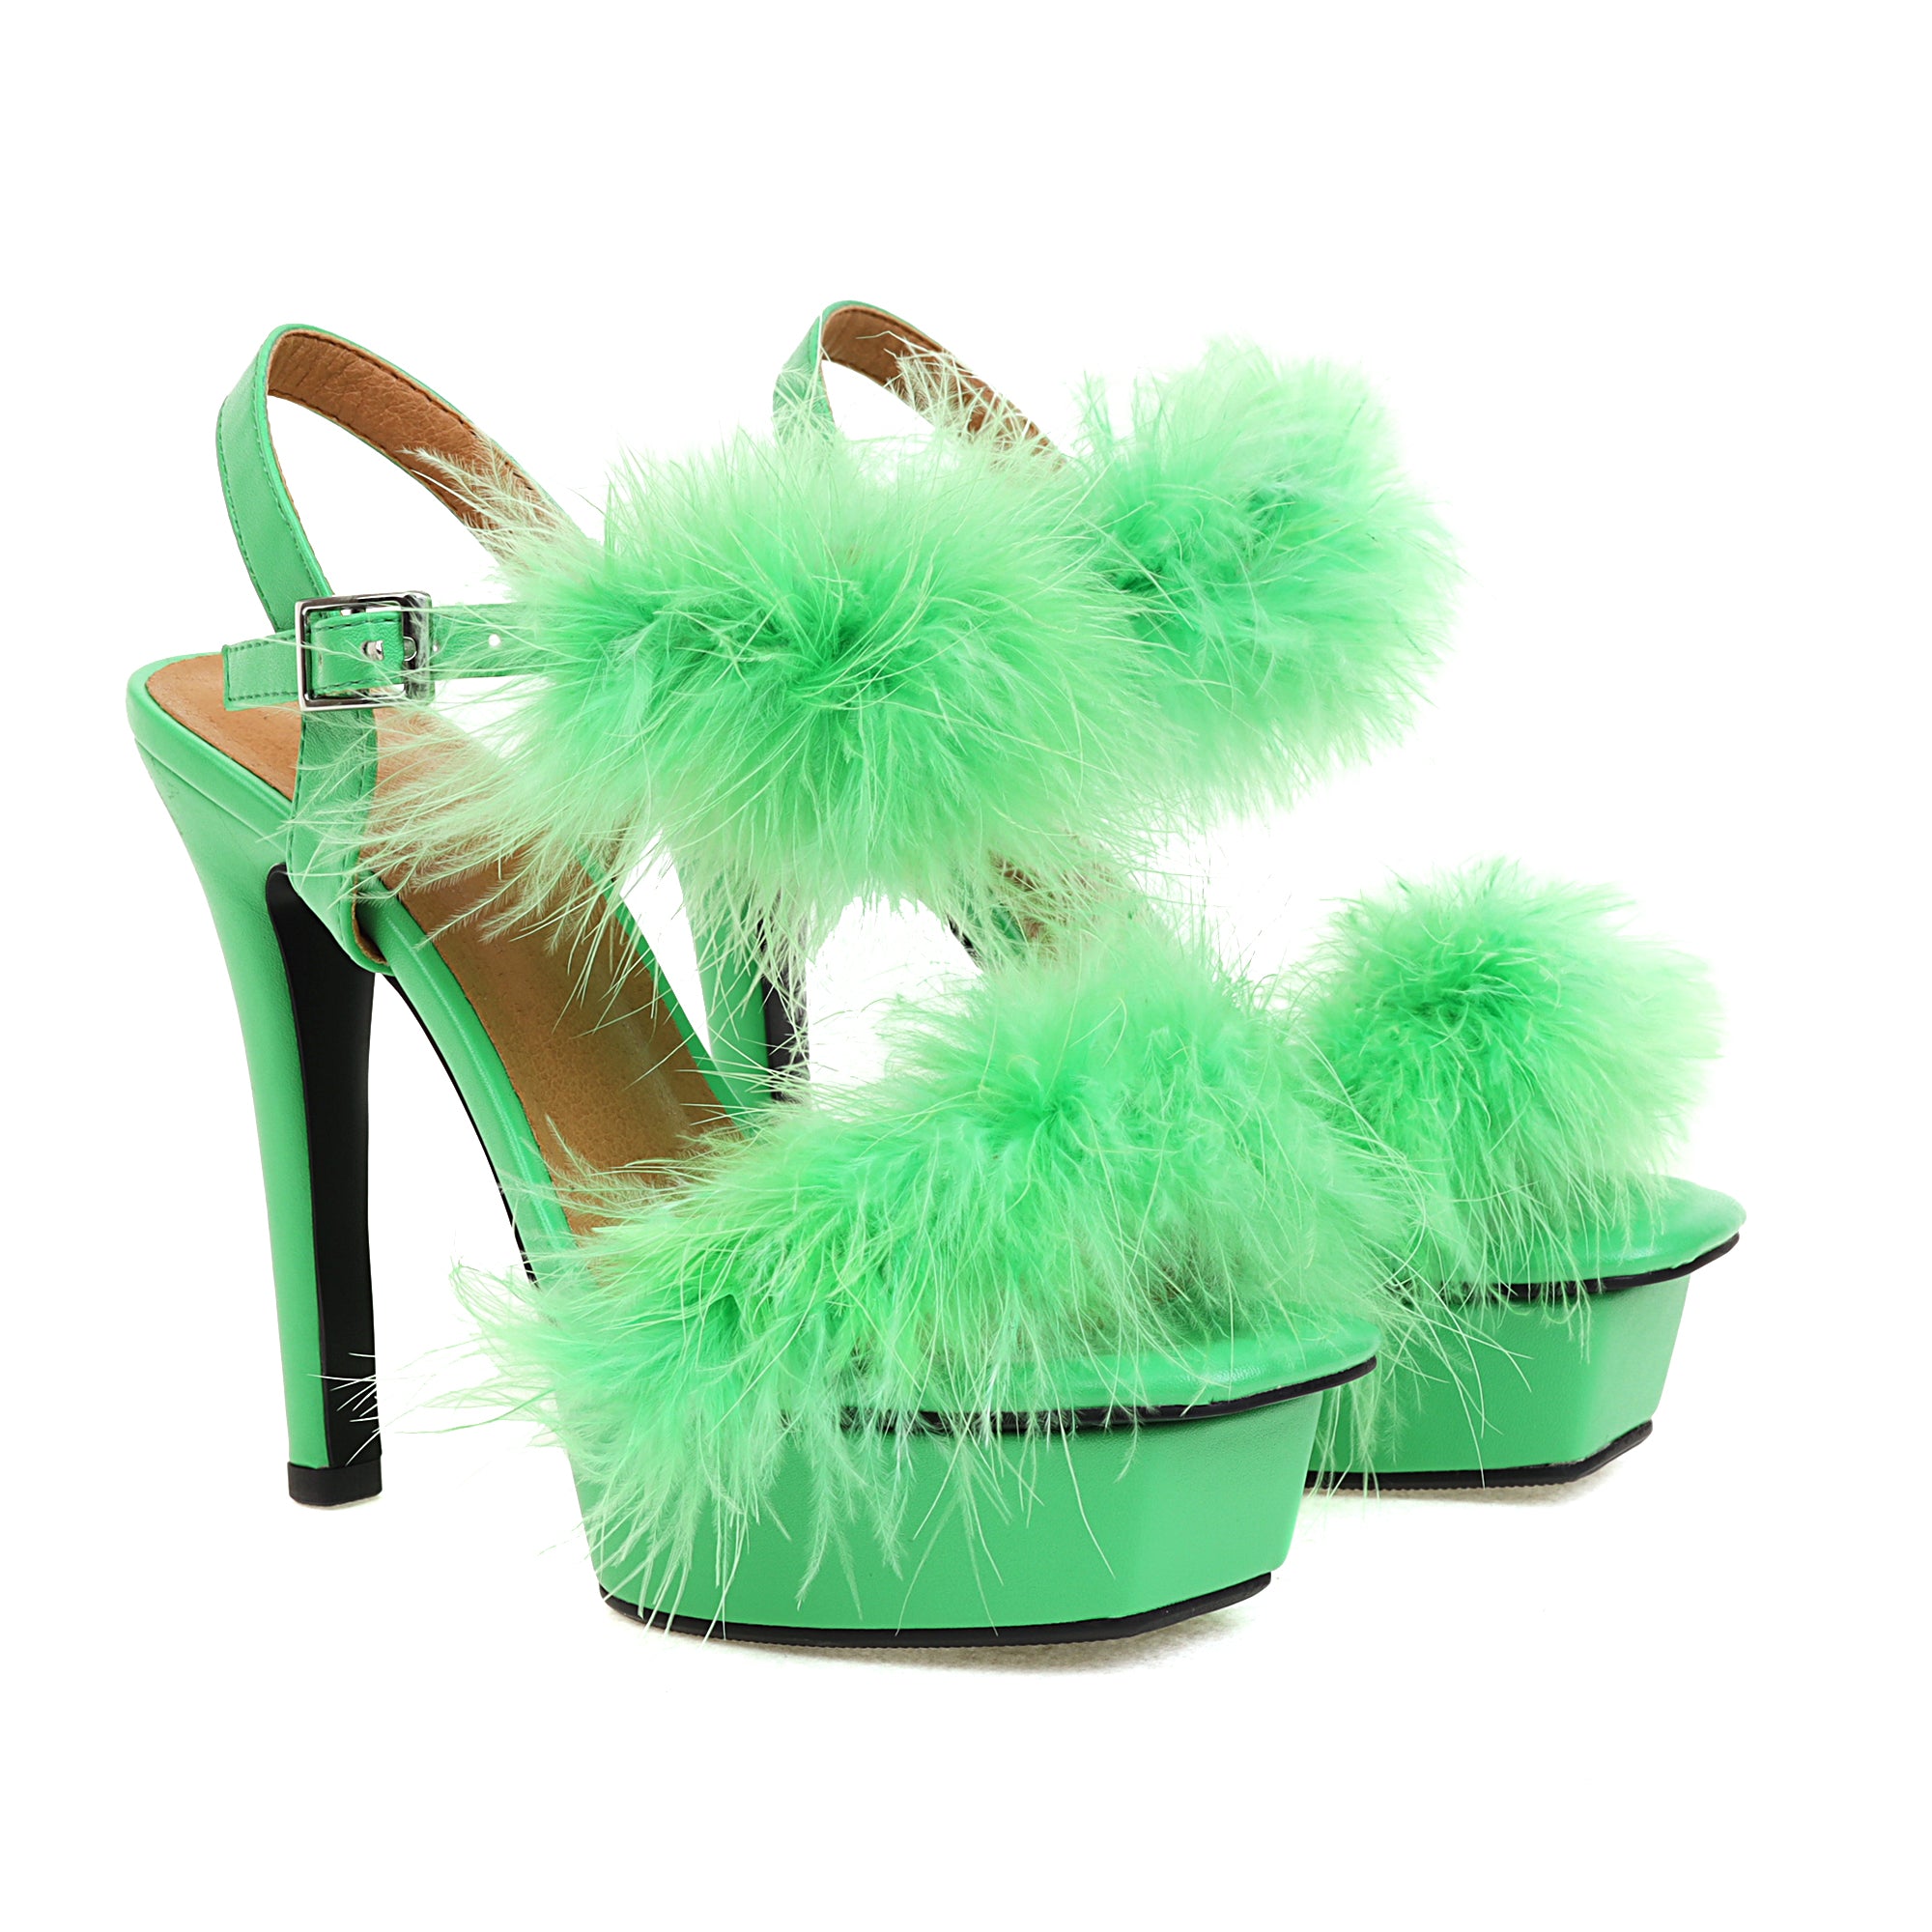 the Platform Rabbit Fur Sexy Stiletto Sandals - Green best platfrom sandals are from bigsizeheels